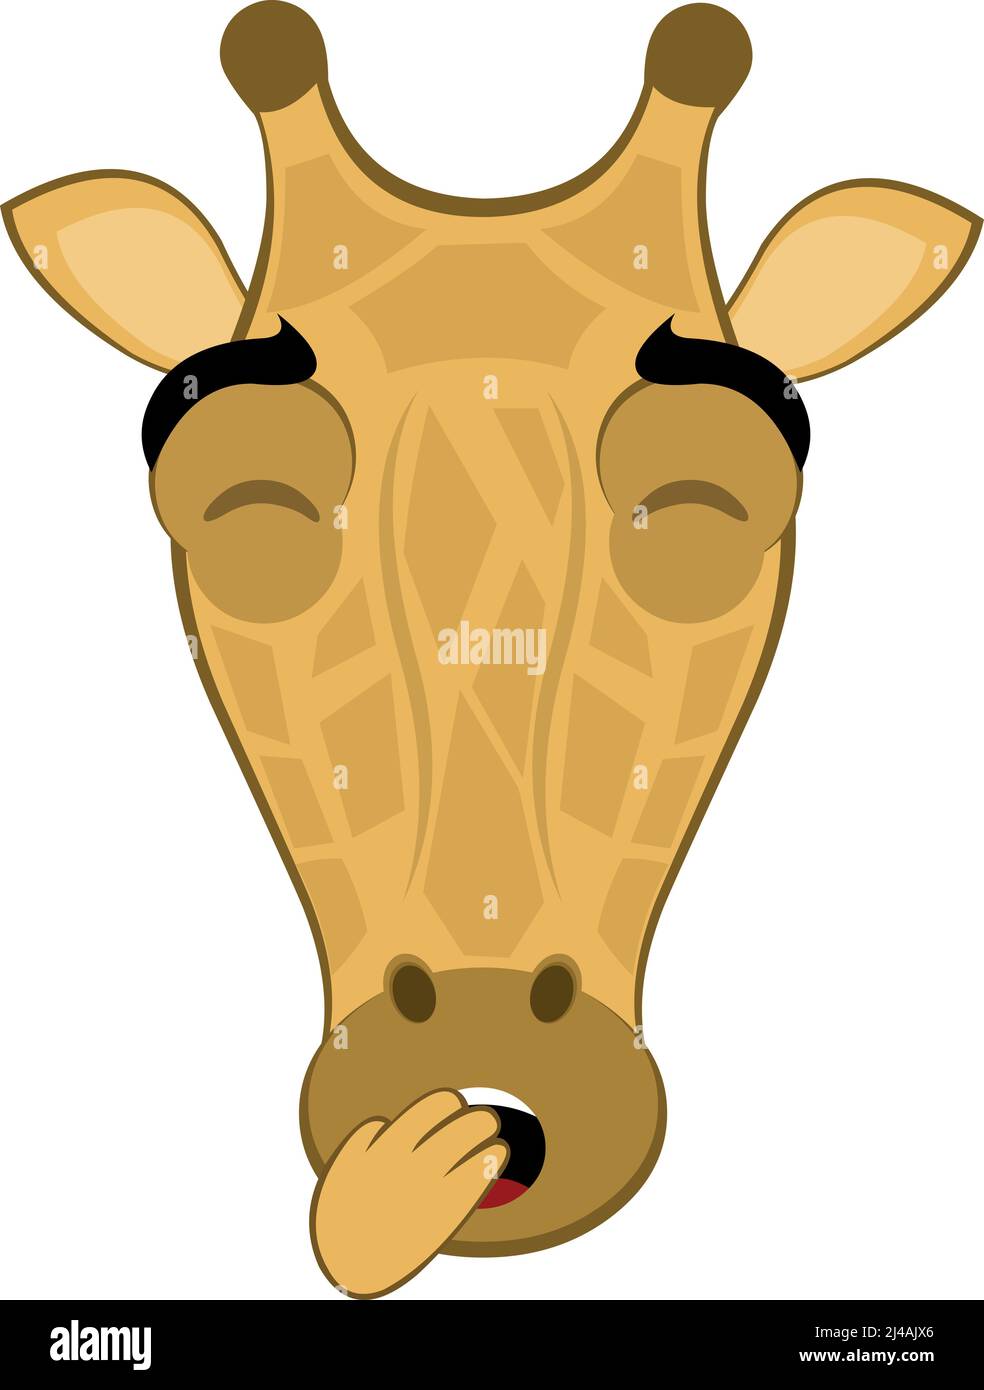 Vector illustration of the face of a cartoon giraffe yawning Stock Vector